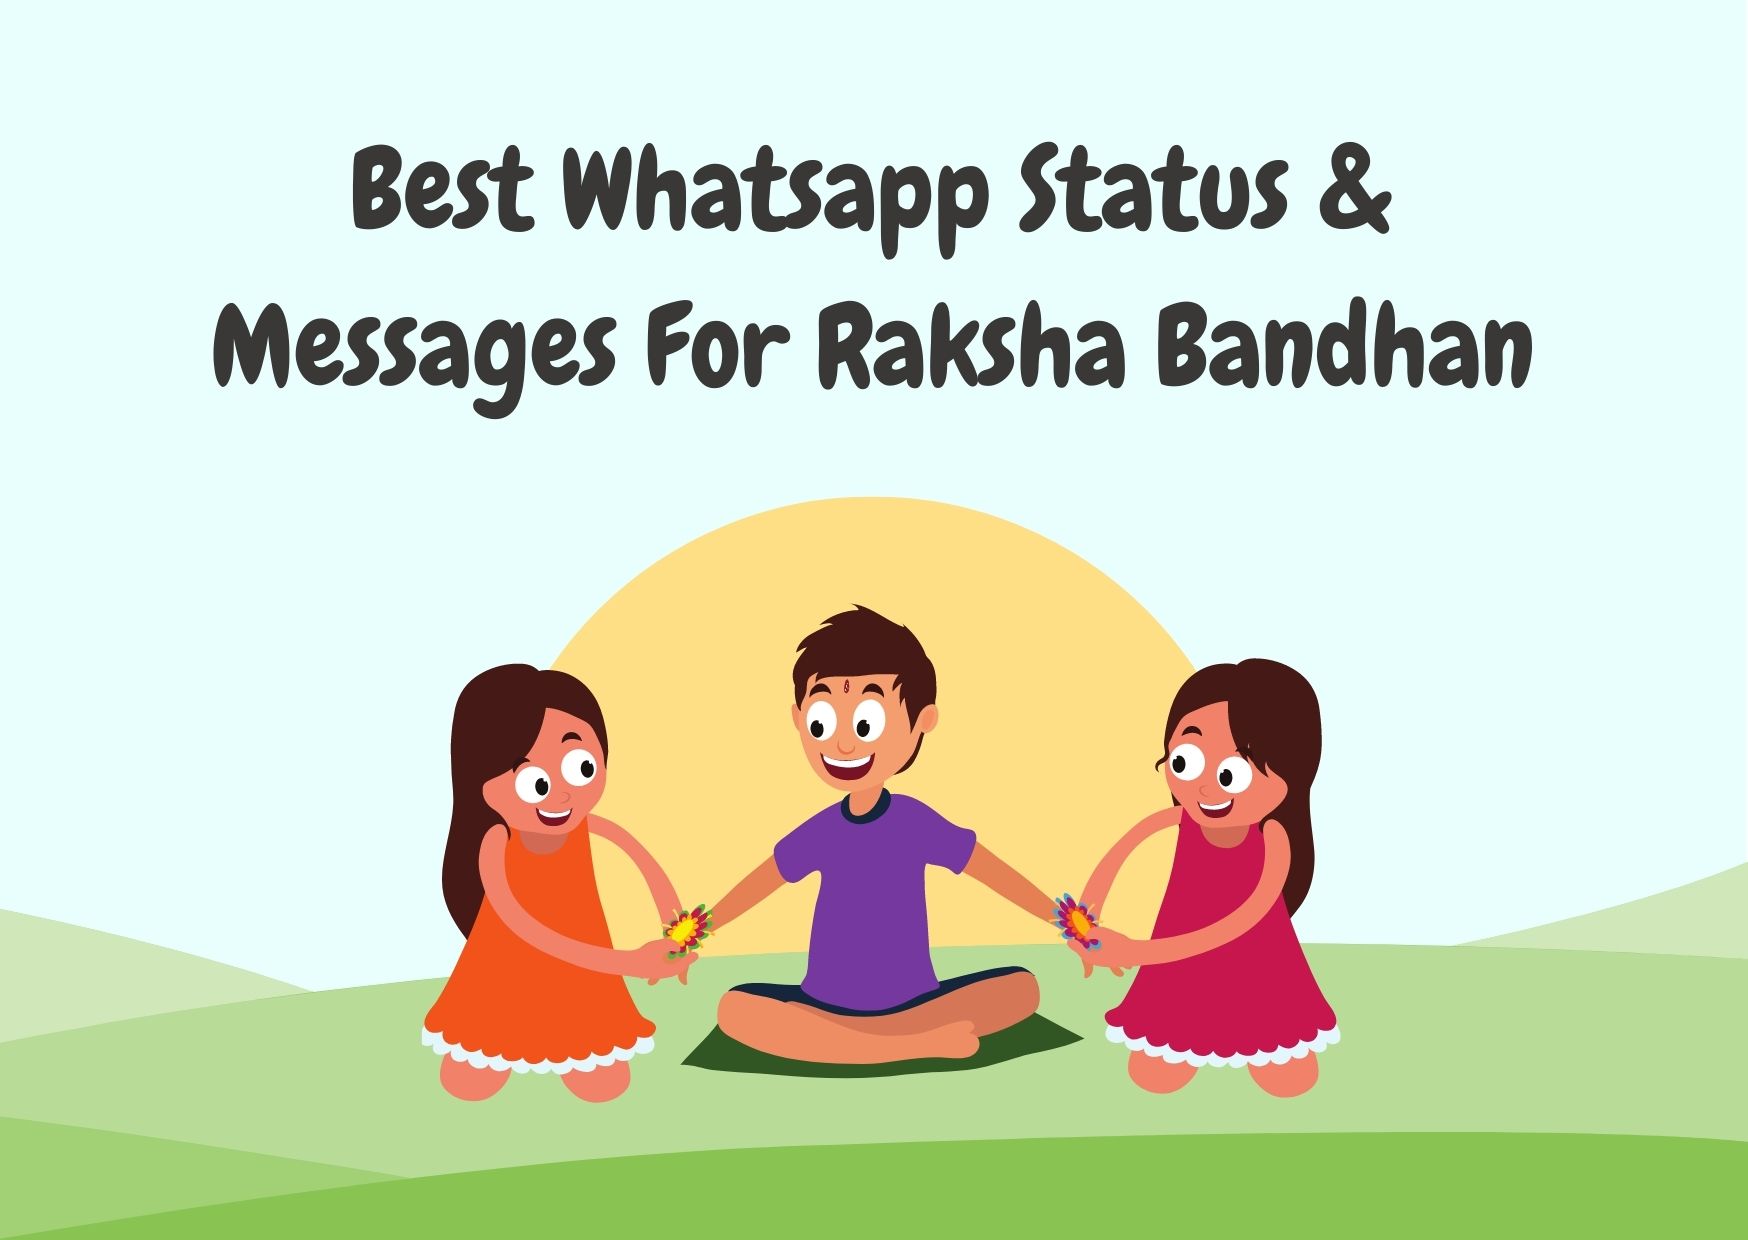 25 Best Whatsapp Status for Raksha Bandhan